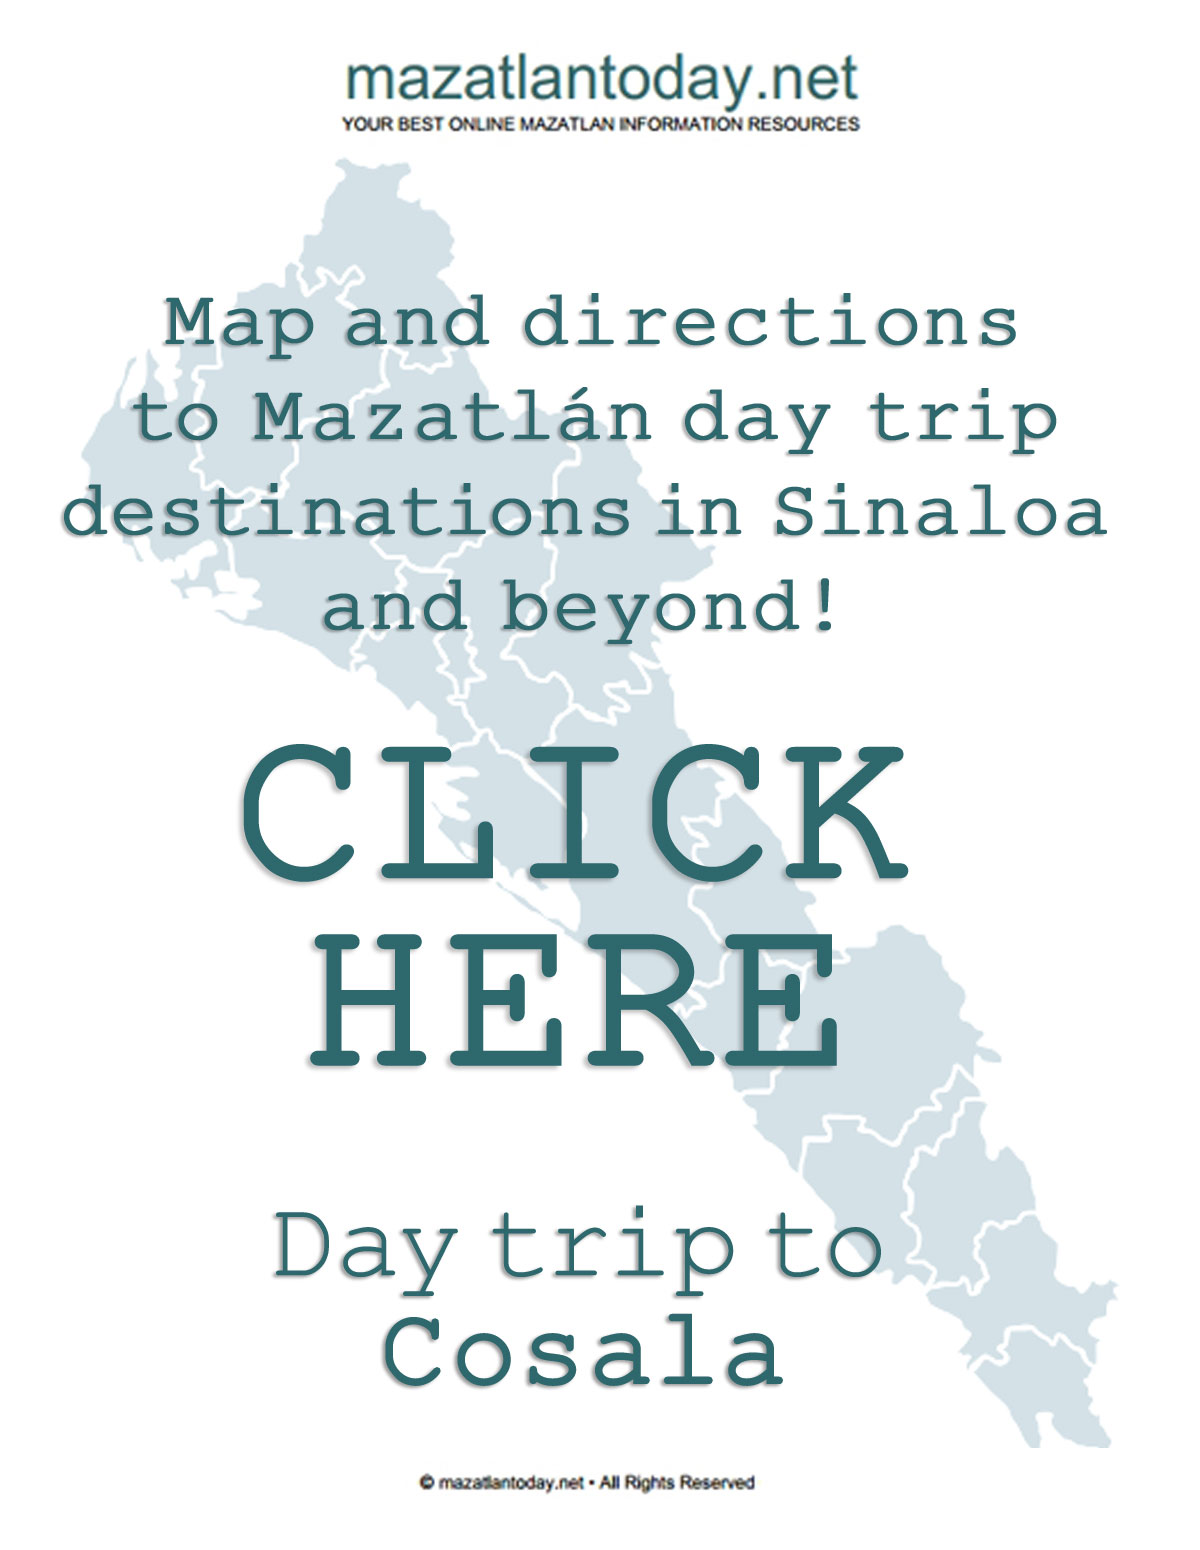 Download free Mazatlan - Cosala day trip map and directions